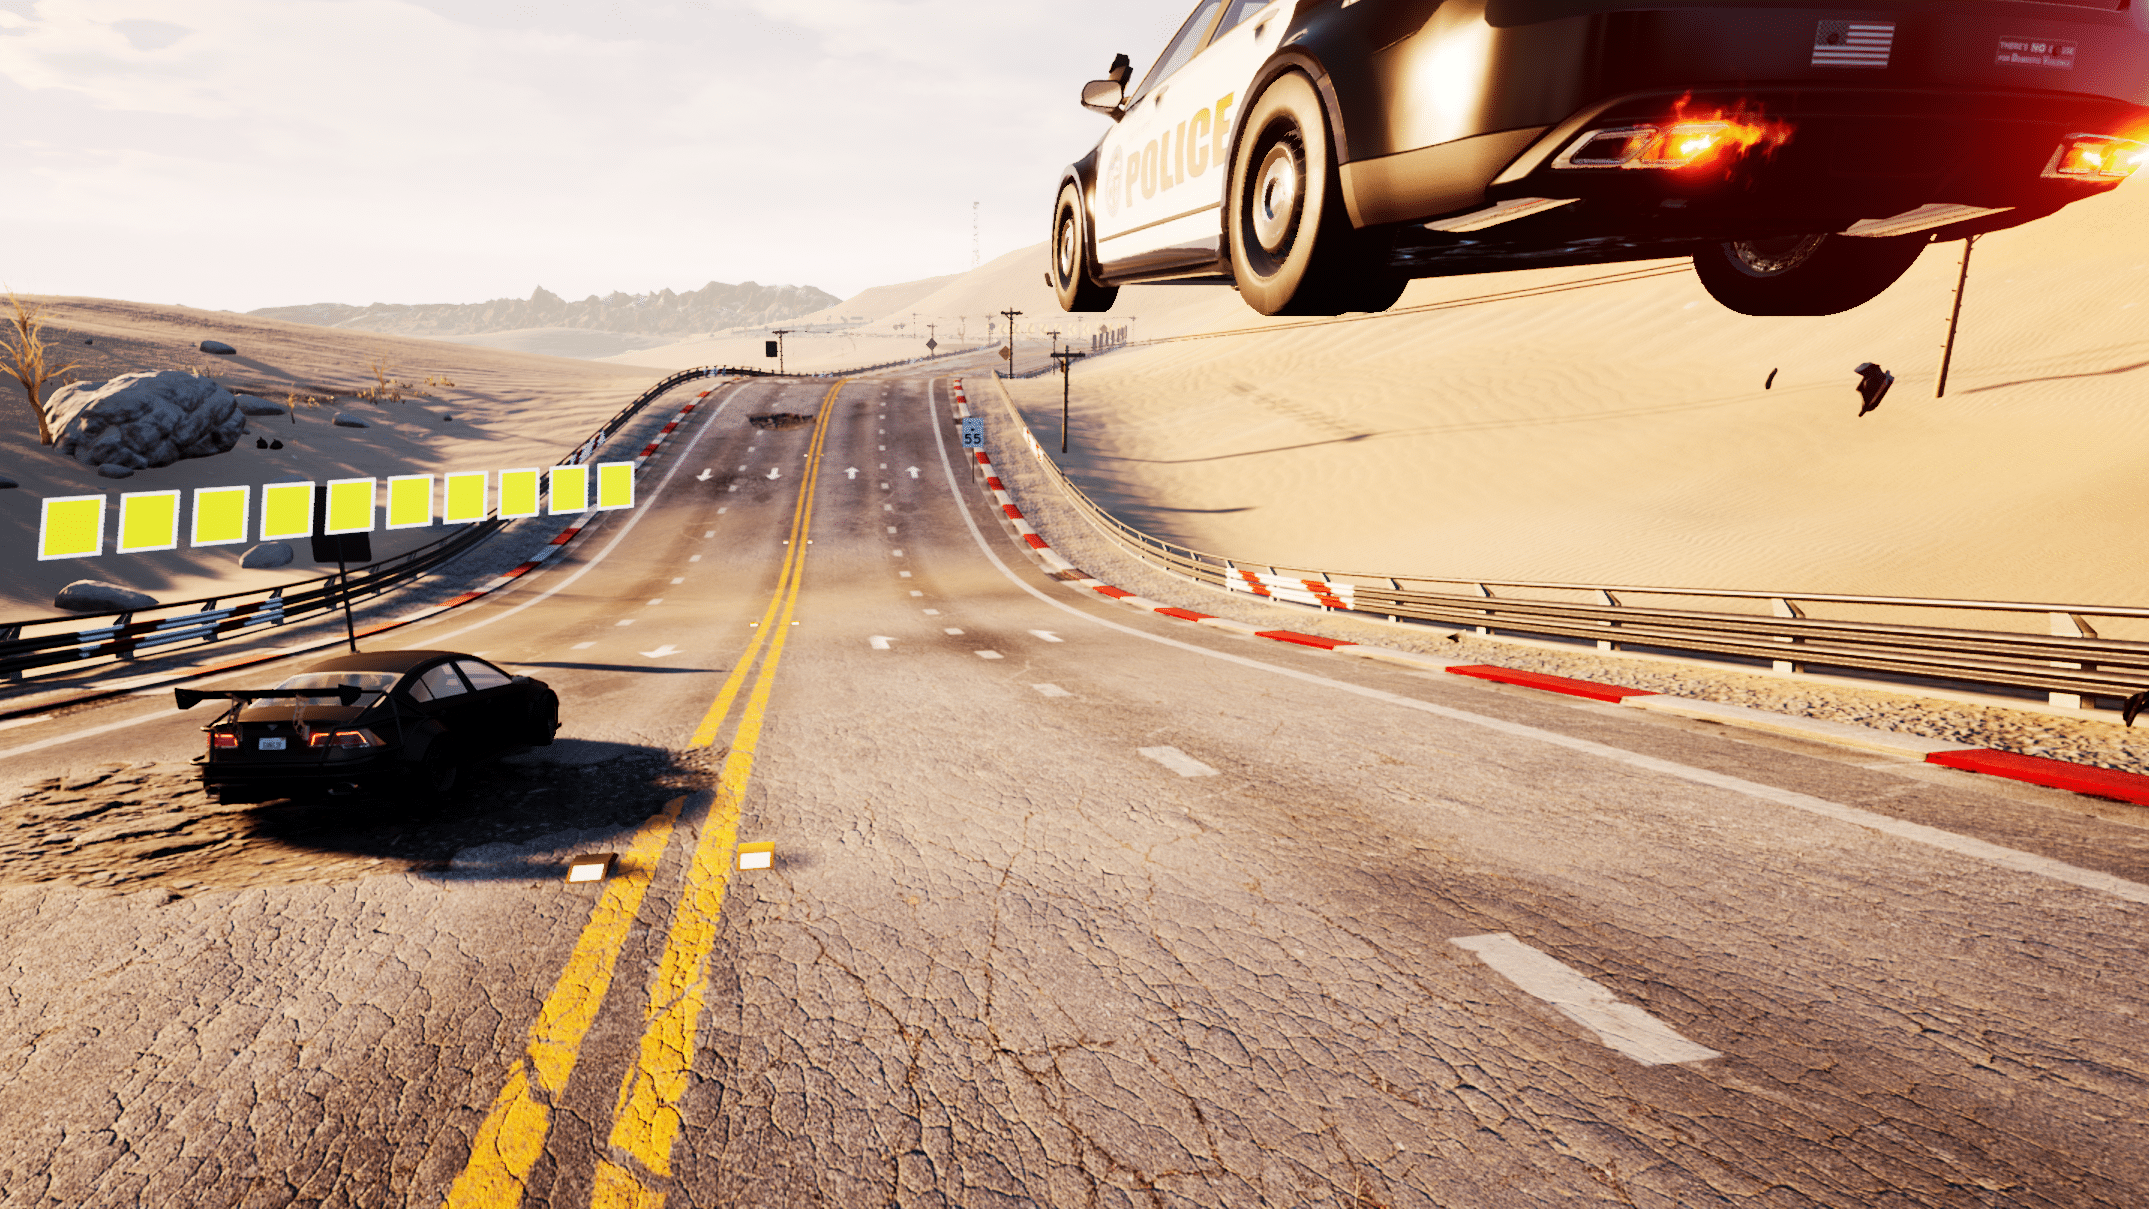 Sucesor Espiritual de Burnout, Dangerous Driving llegará en abril como exclusiva de Epic Games Store en PC